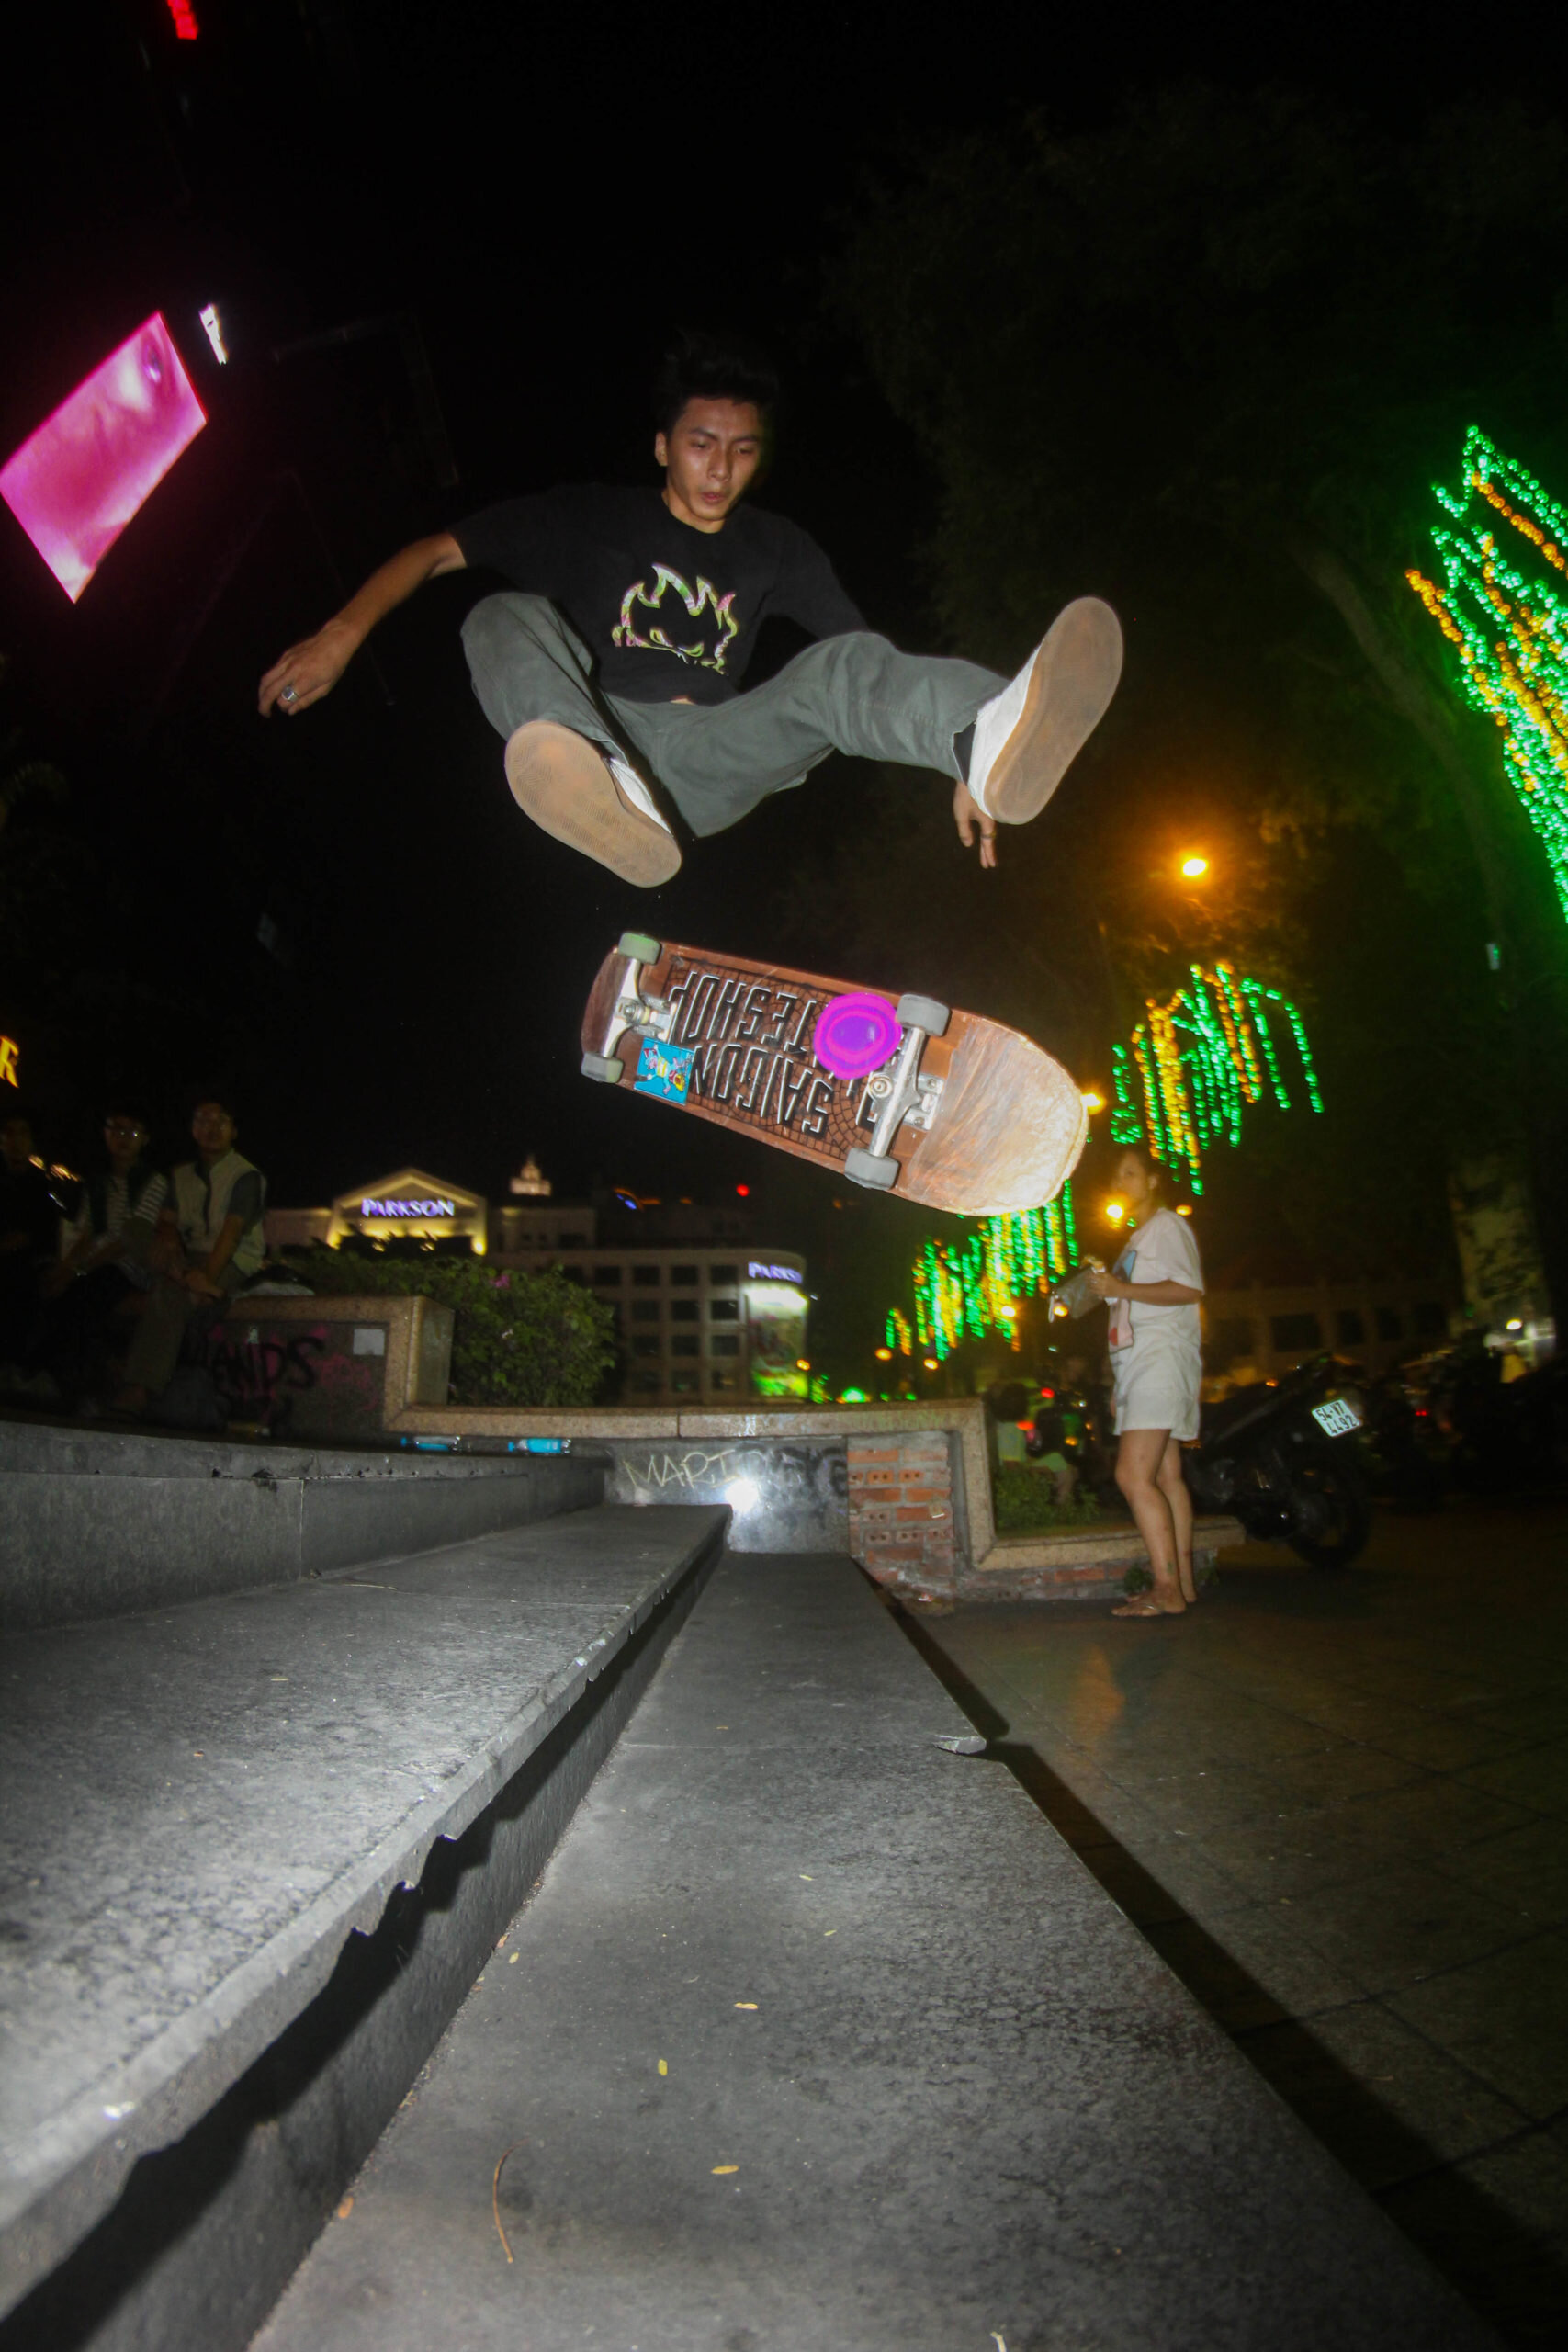 Vietnam Skateboard - Đức Tran - Varial Heel1 - Vincom Center District 1